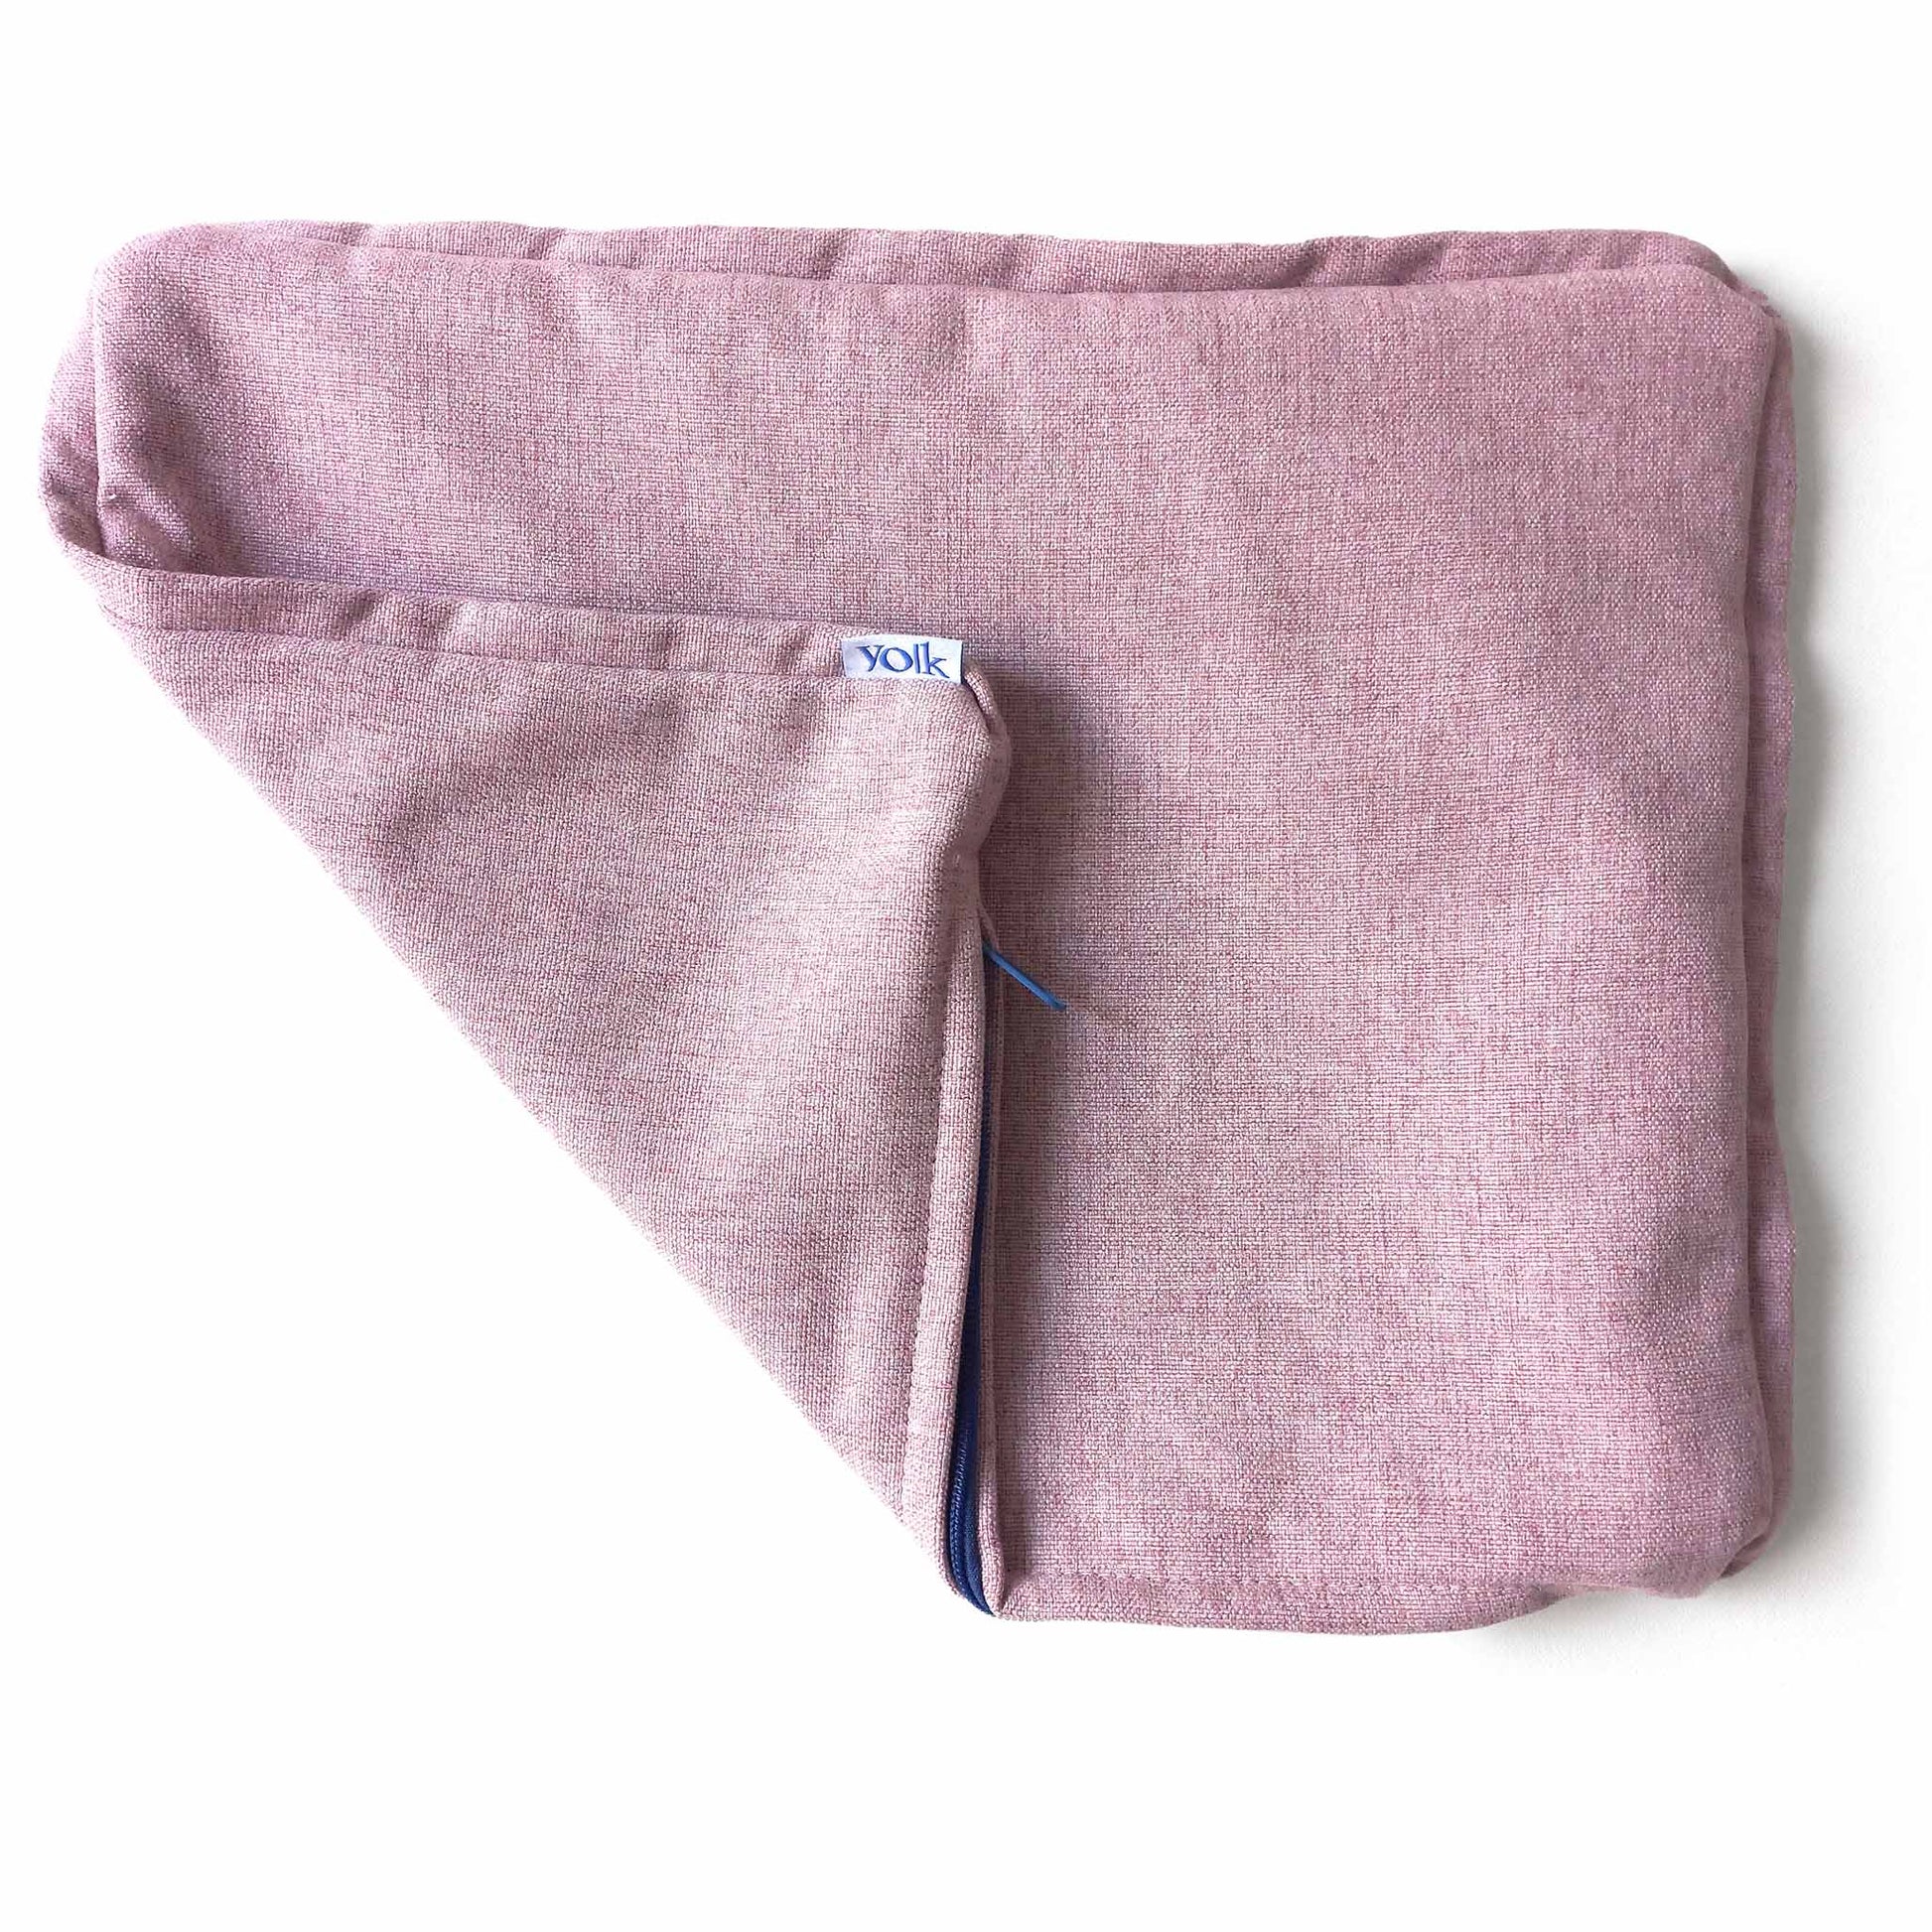 Pink rectangular decorative cushion cover